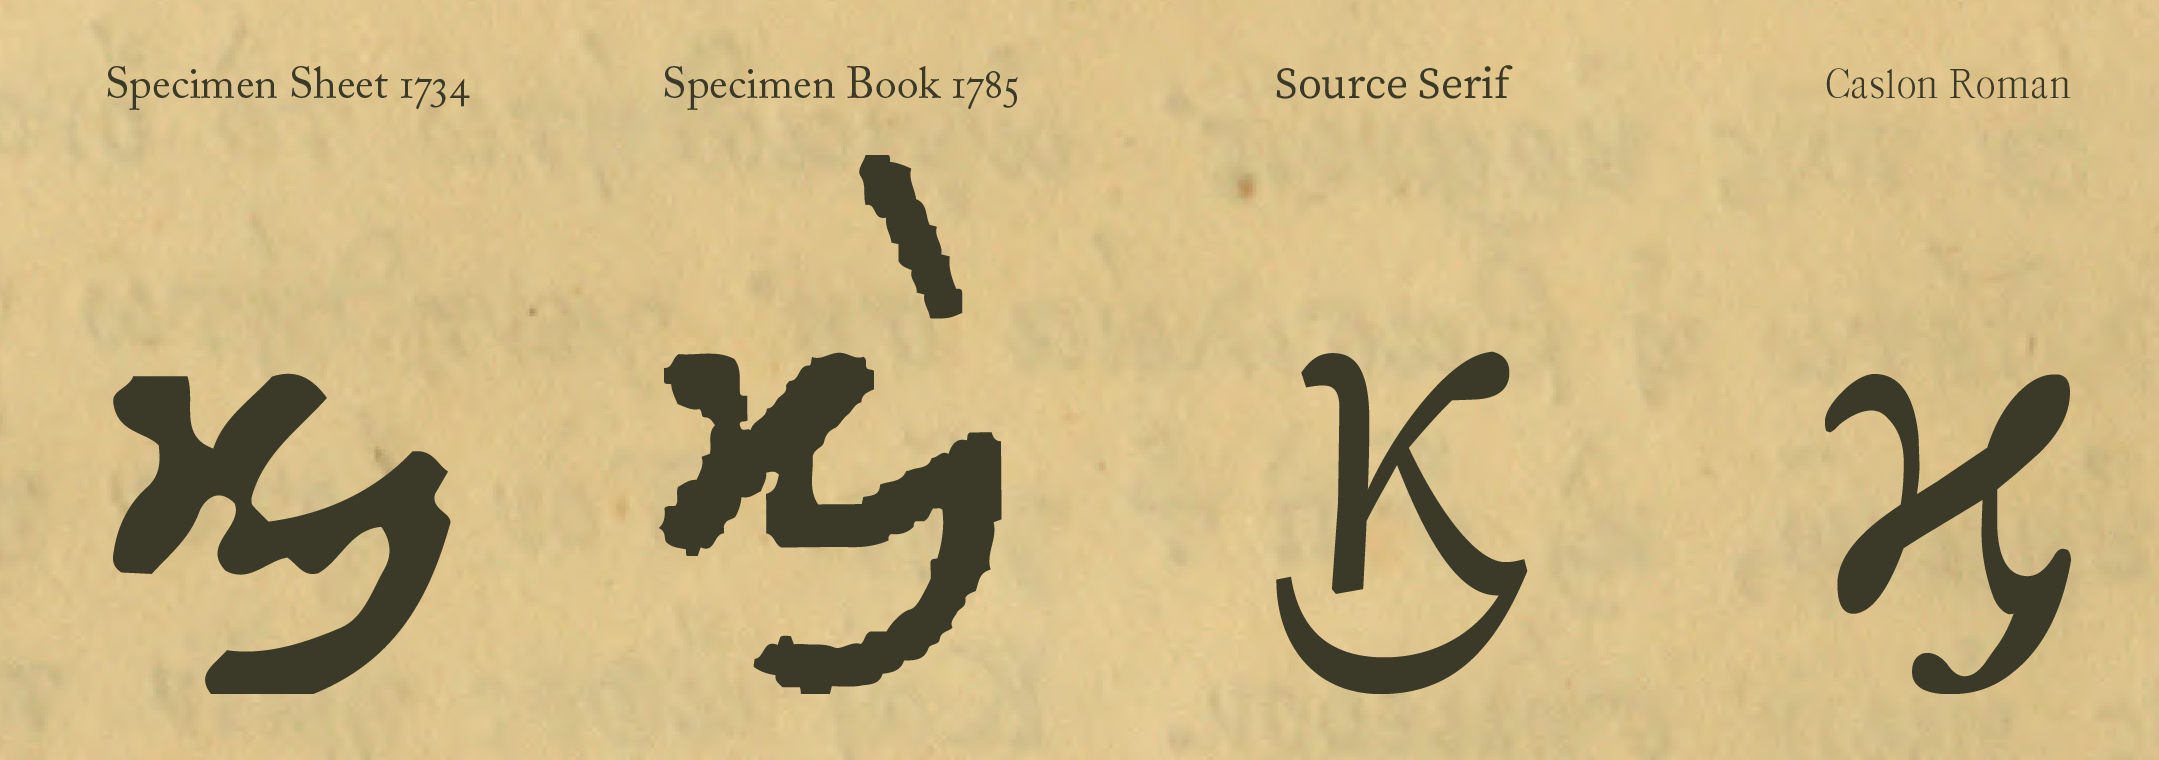 Kai ϗ̀ – the Greek equivalent of &amp;.